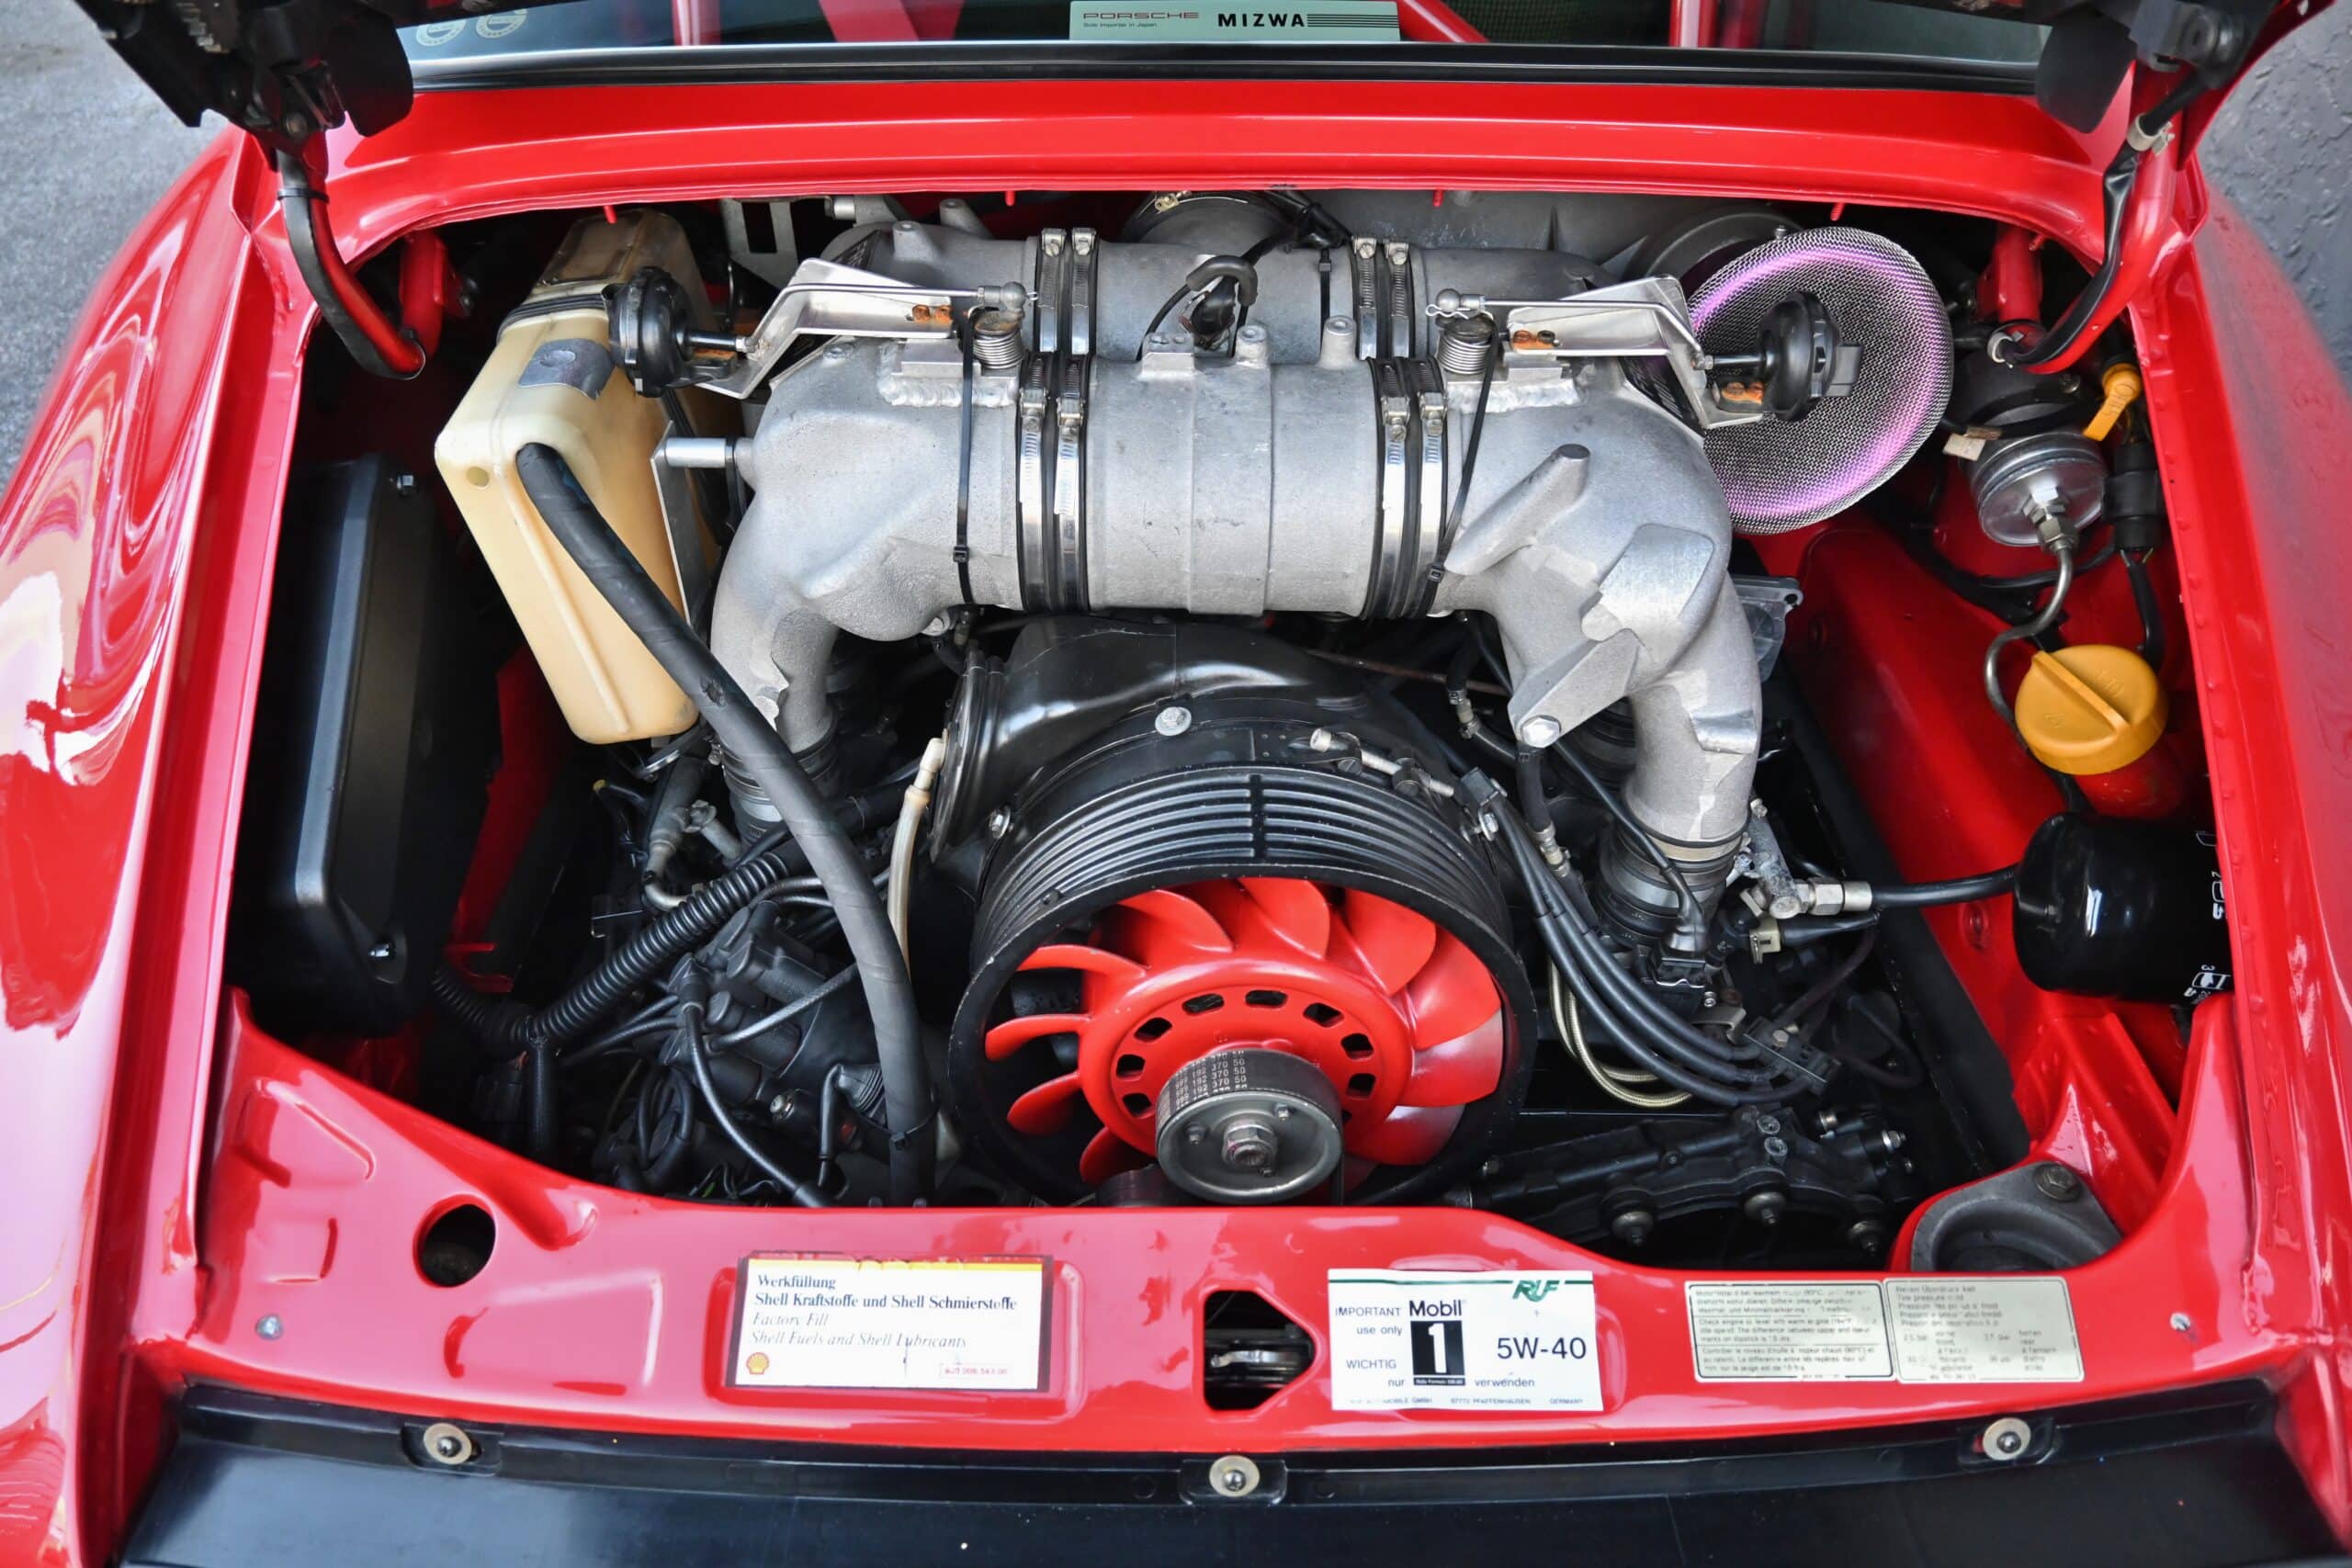 1992 Porsche 911 964 Carrera RS 3.8L Freisenger motor / 6 speed G50/30 Cup transmission /Carbon Lightweight body